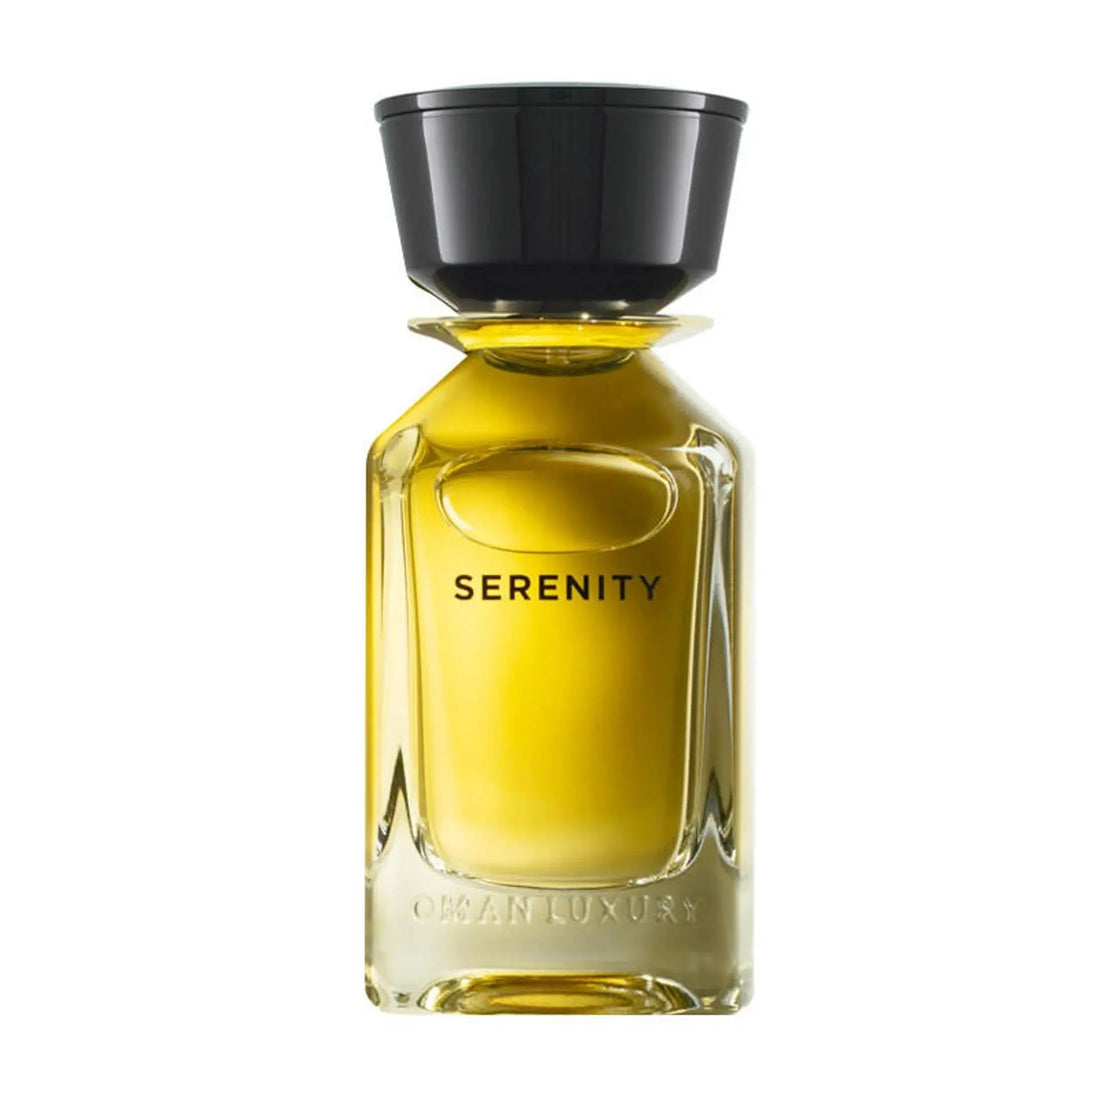 Оманлюксовый парфюм Serenity - 100 мл